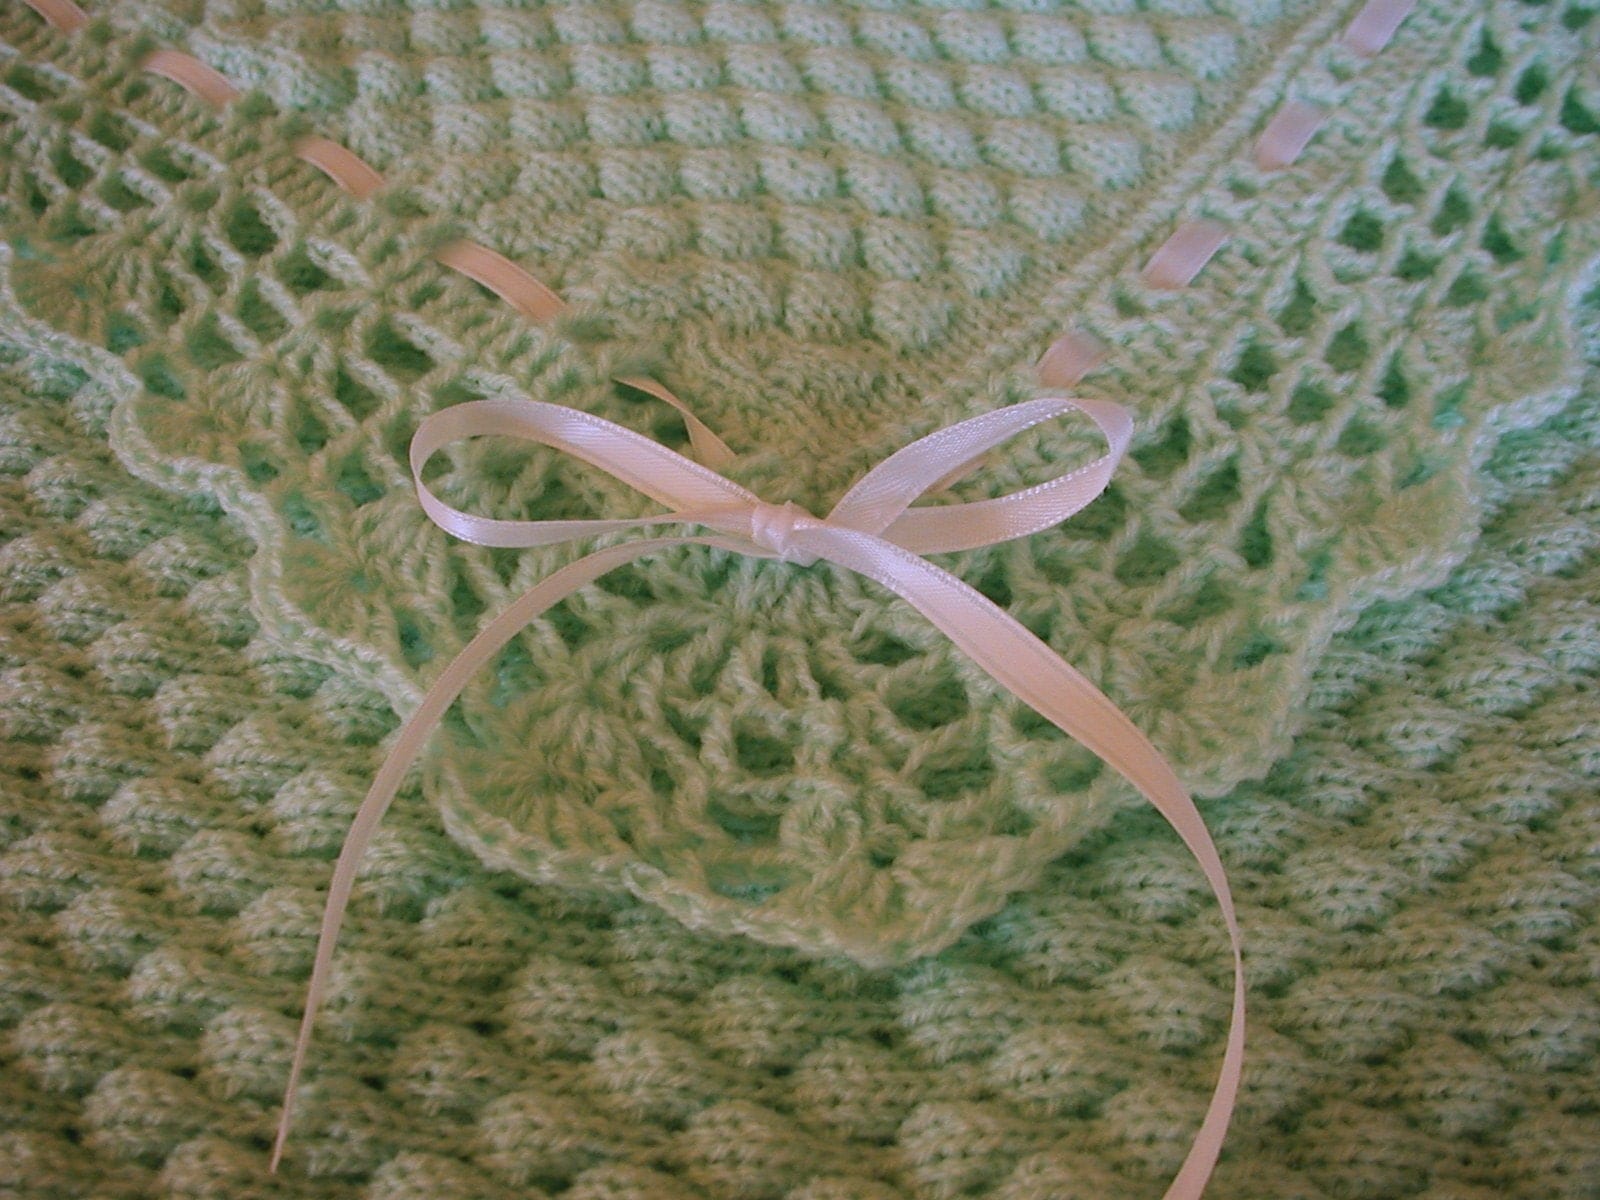 Crochet Baby Blanket - Buzzle Web Portal: Intelligent Life on the Web